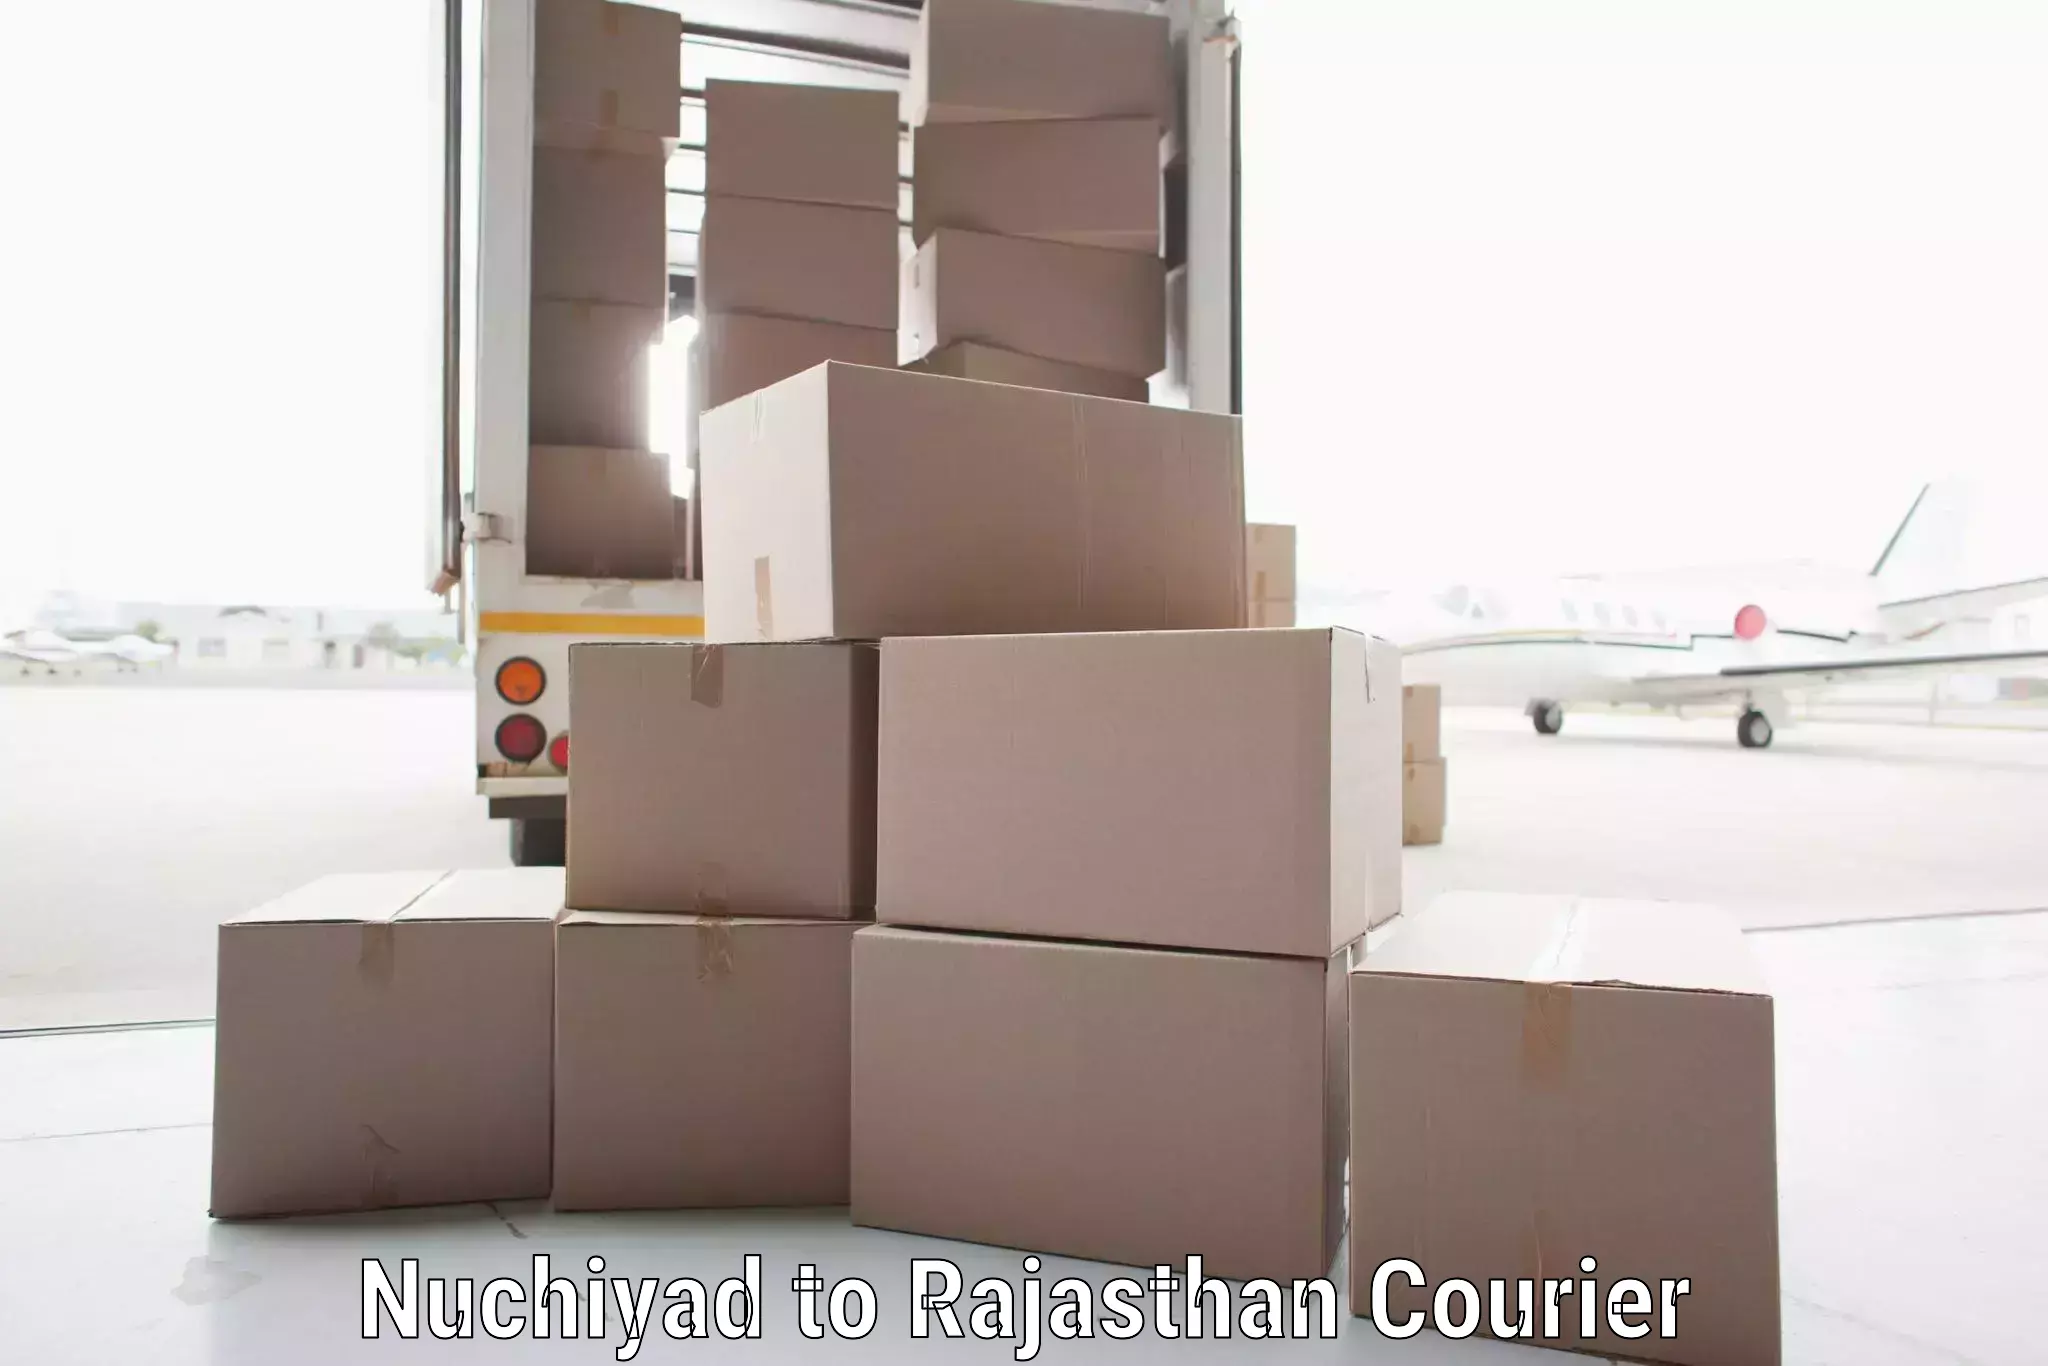 Courier service innovation in Nuchiyad to Kumbhalgarh